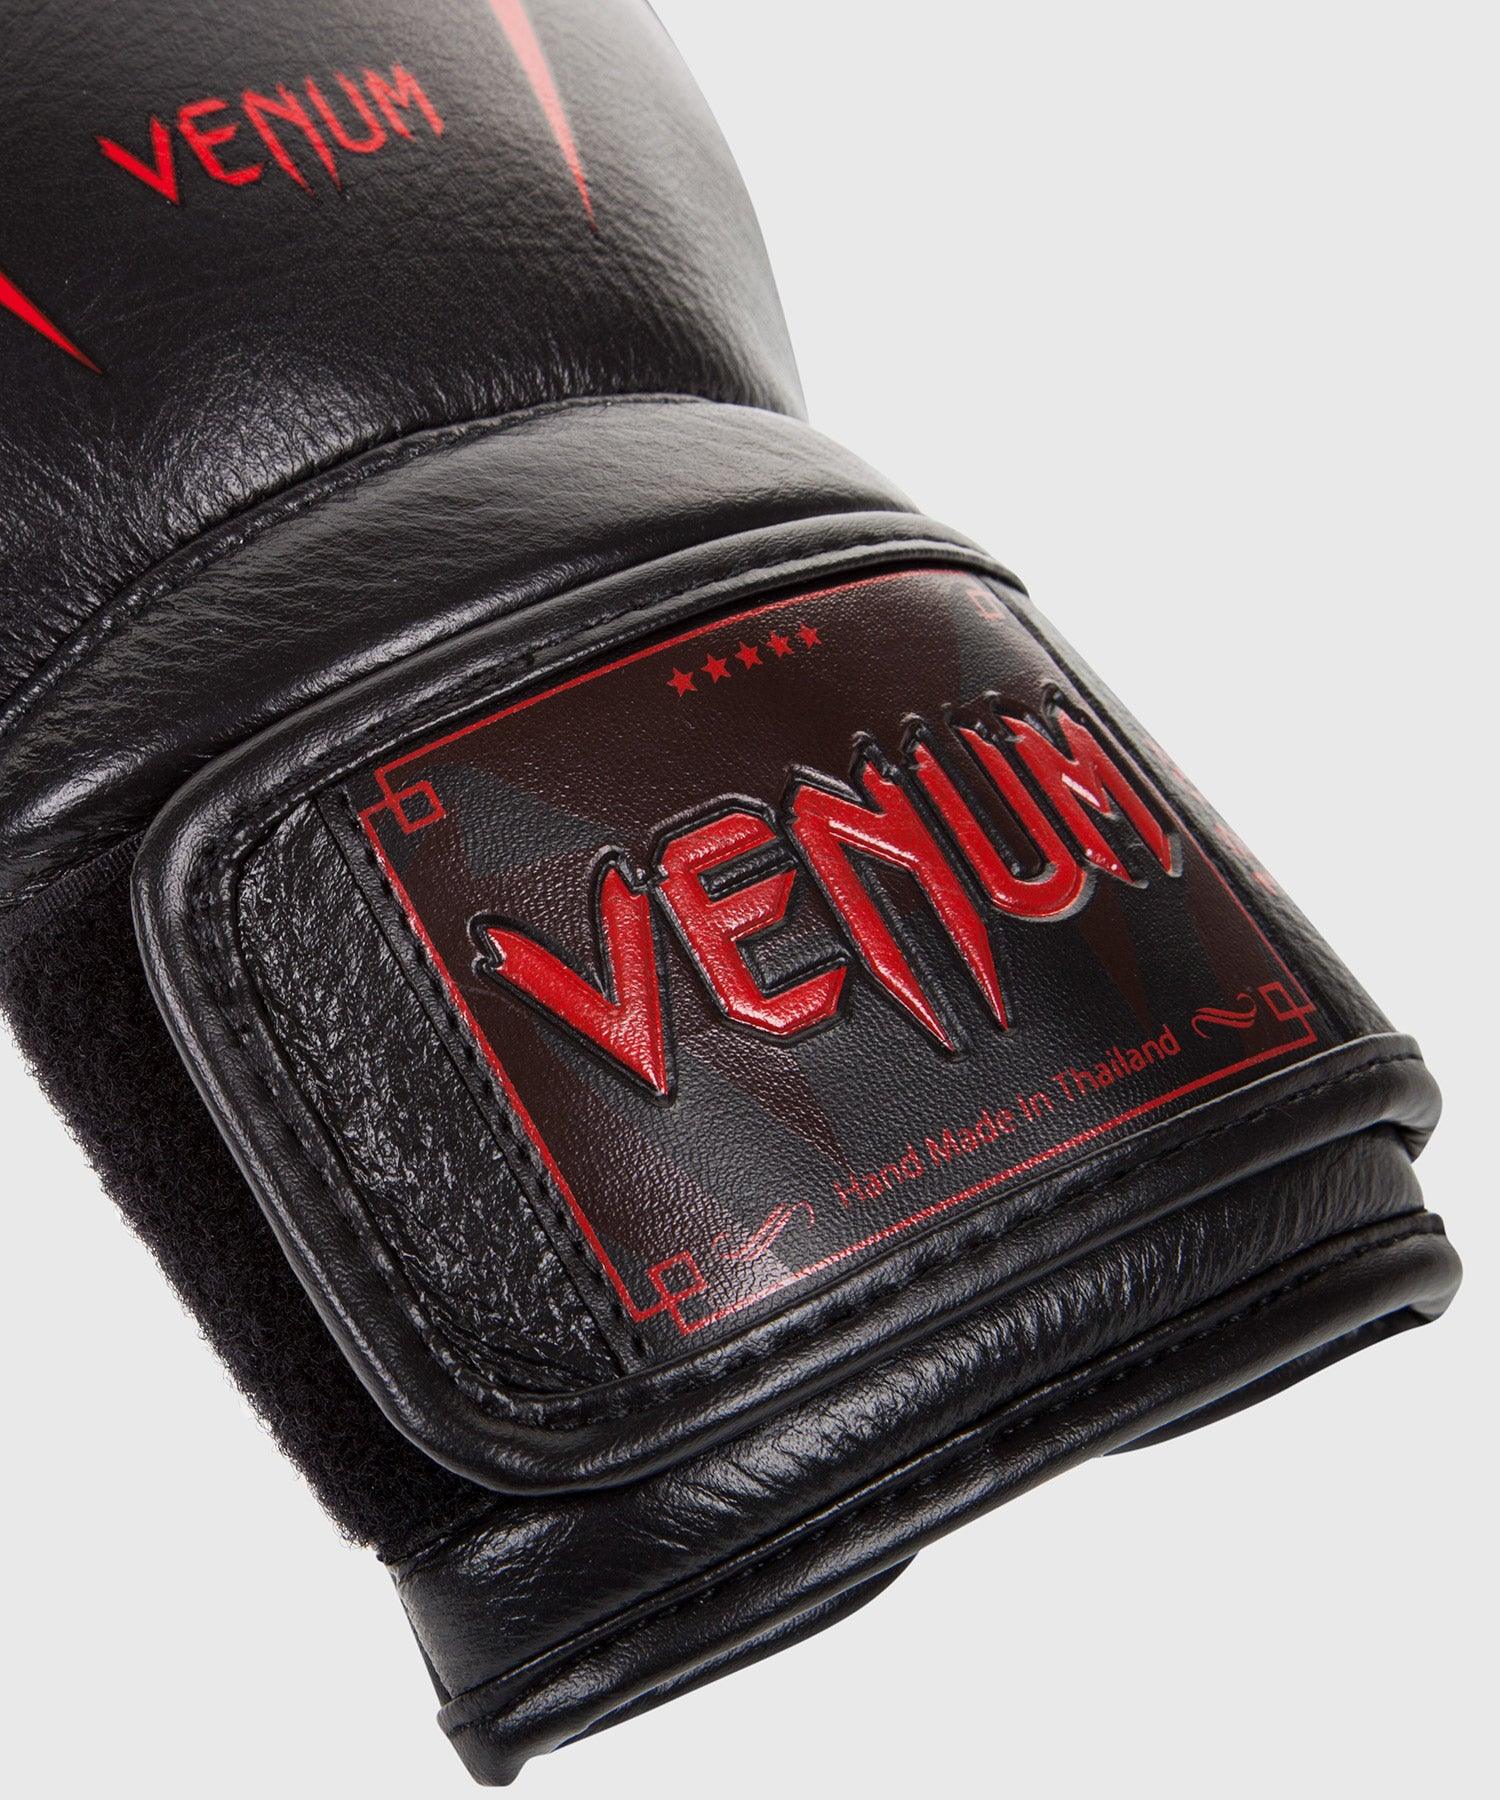 Venum Giant 3.0 Boxing Gloves - Nappa Leather - Black Devil Picture 4